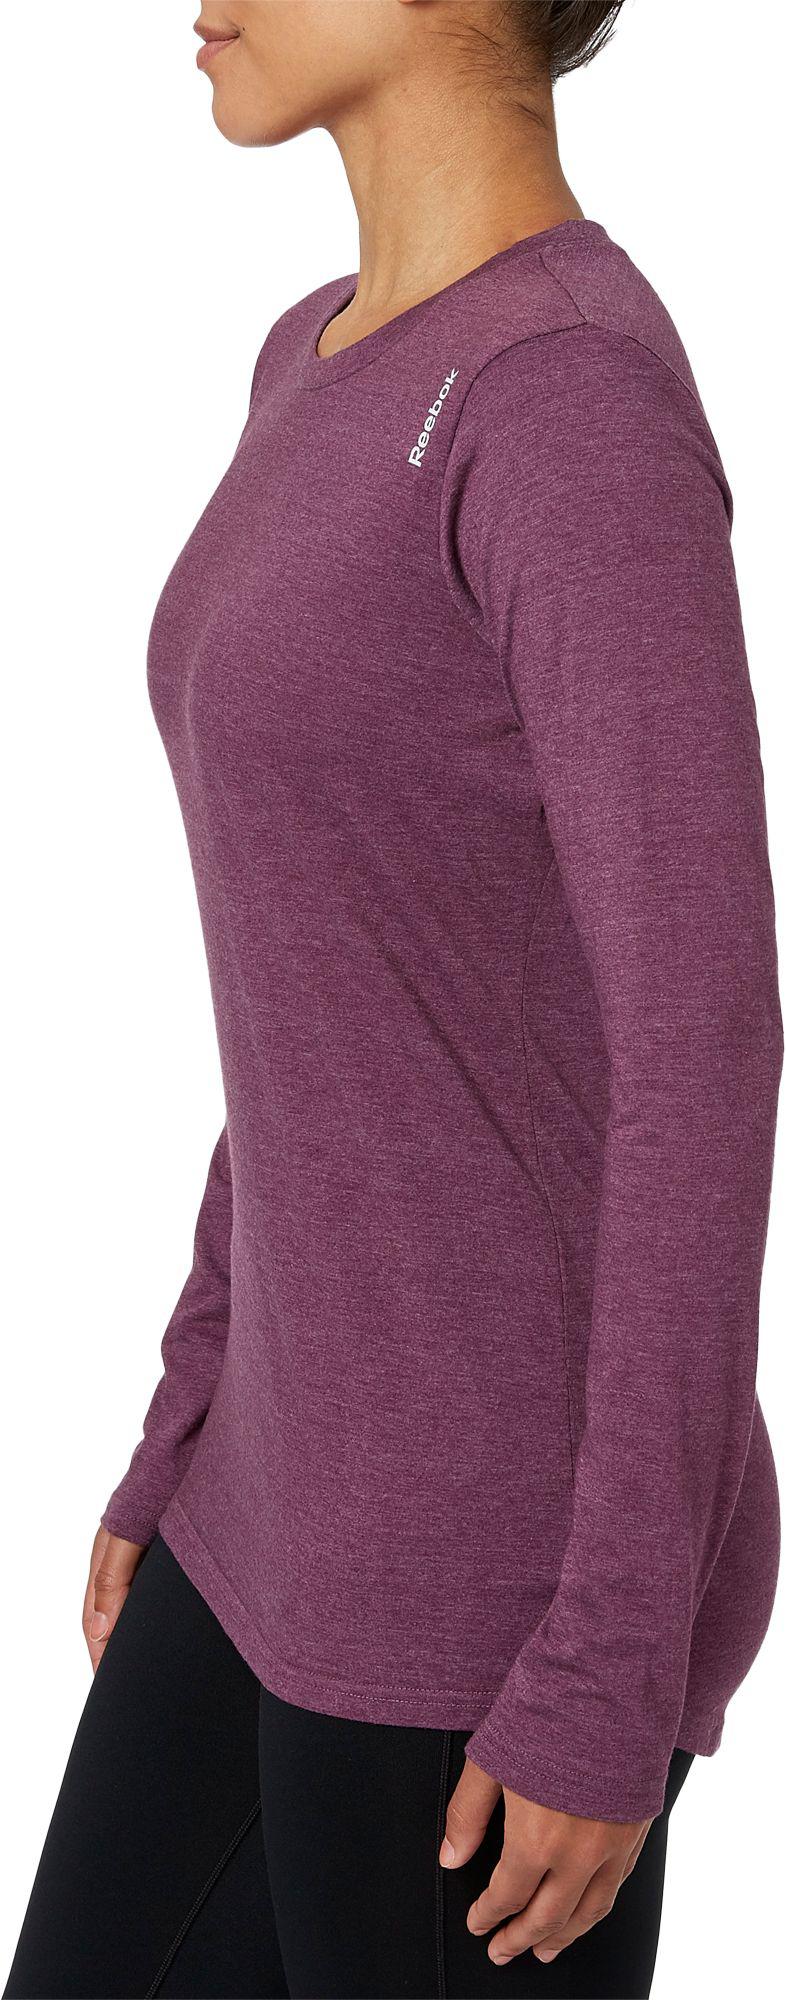 reebok women's heather core cotton long sleeve shirt